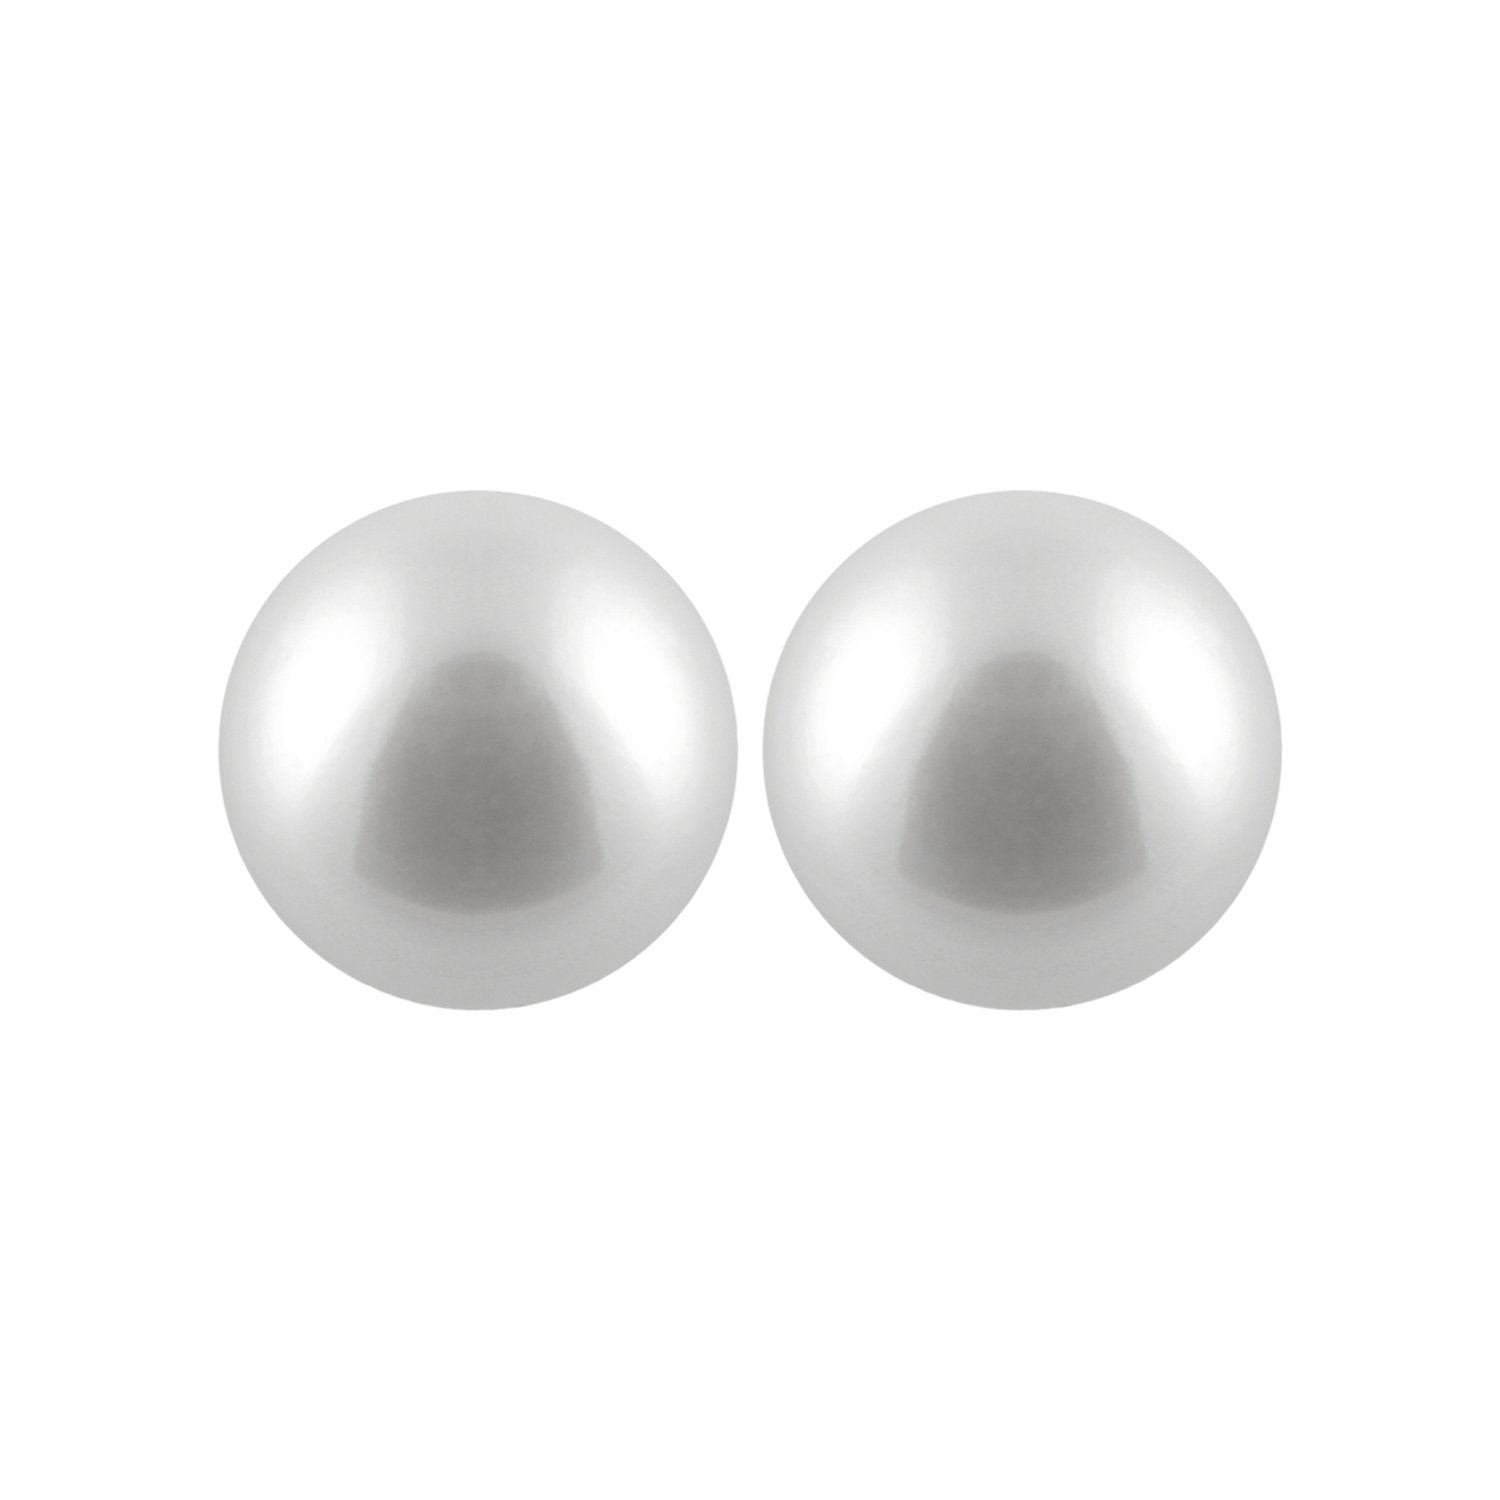 Round White Akoya Pearl Stud Earrings